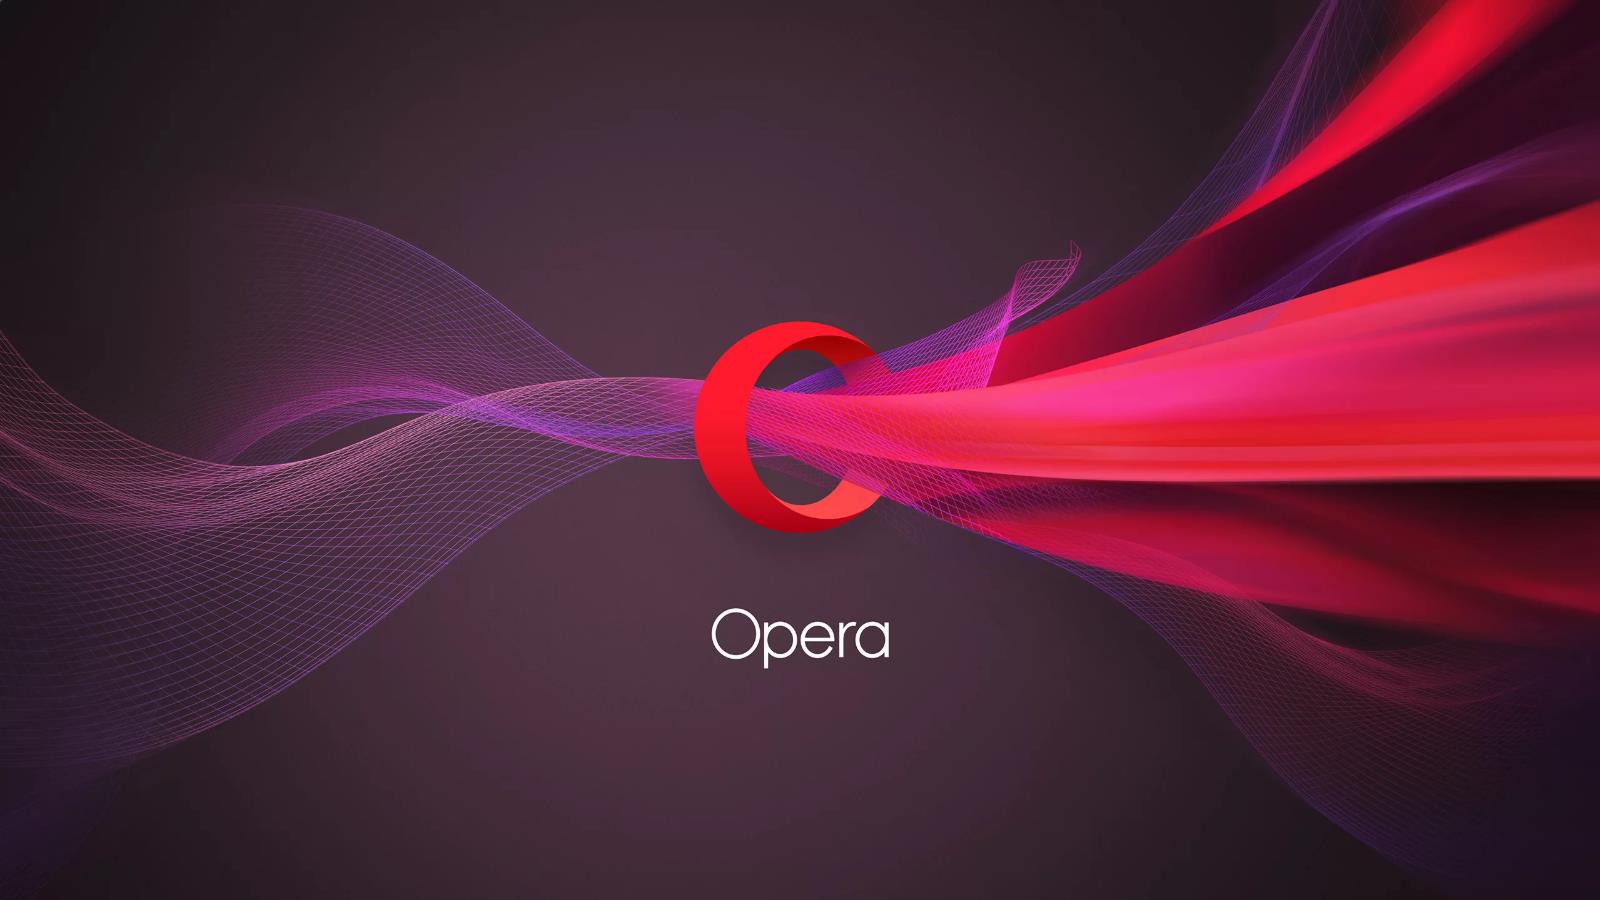 Opera logo full